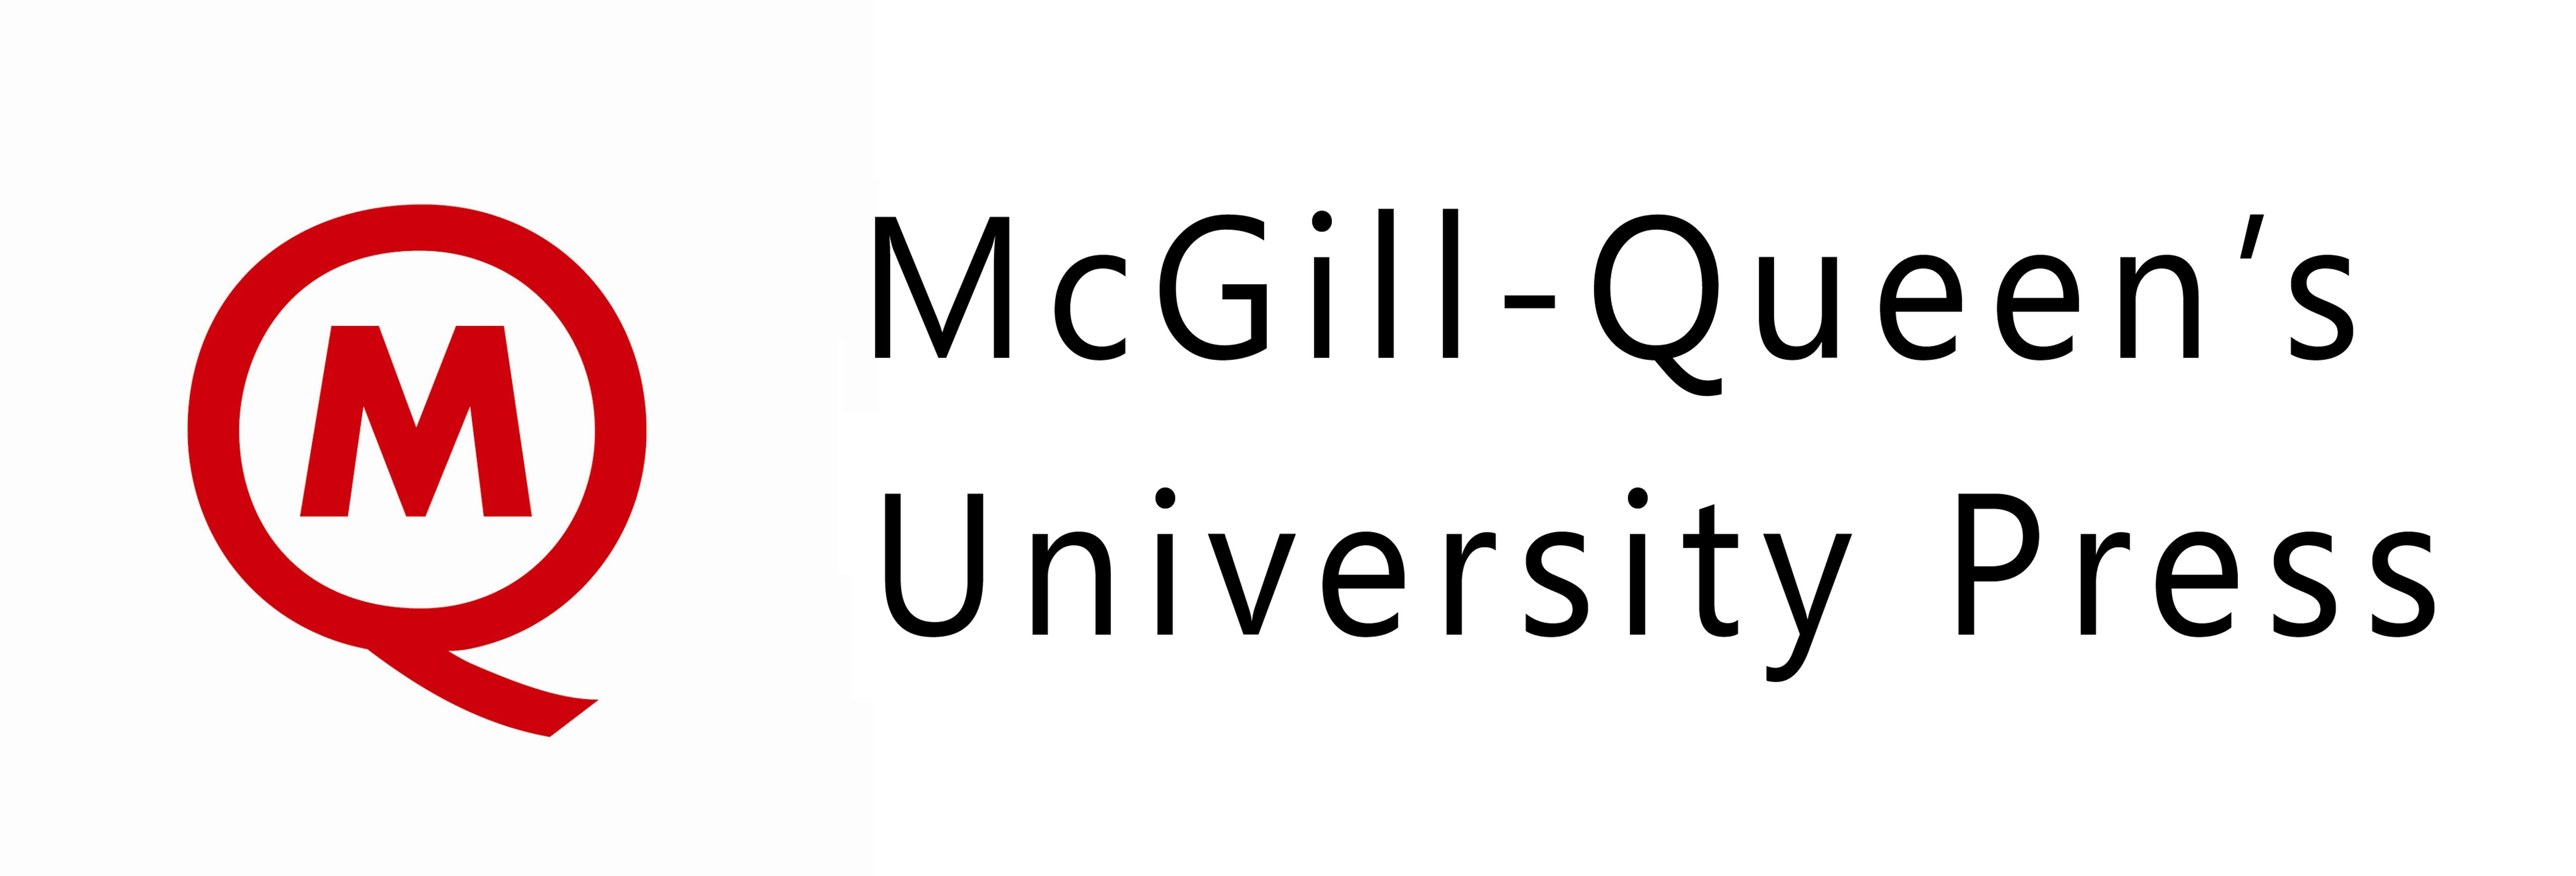 <p>McGill-Queen's University Press</p>
